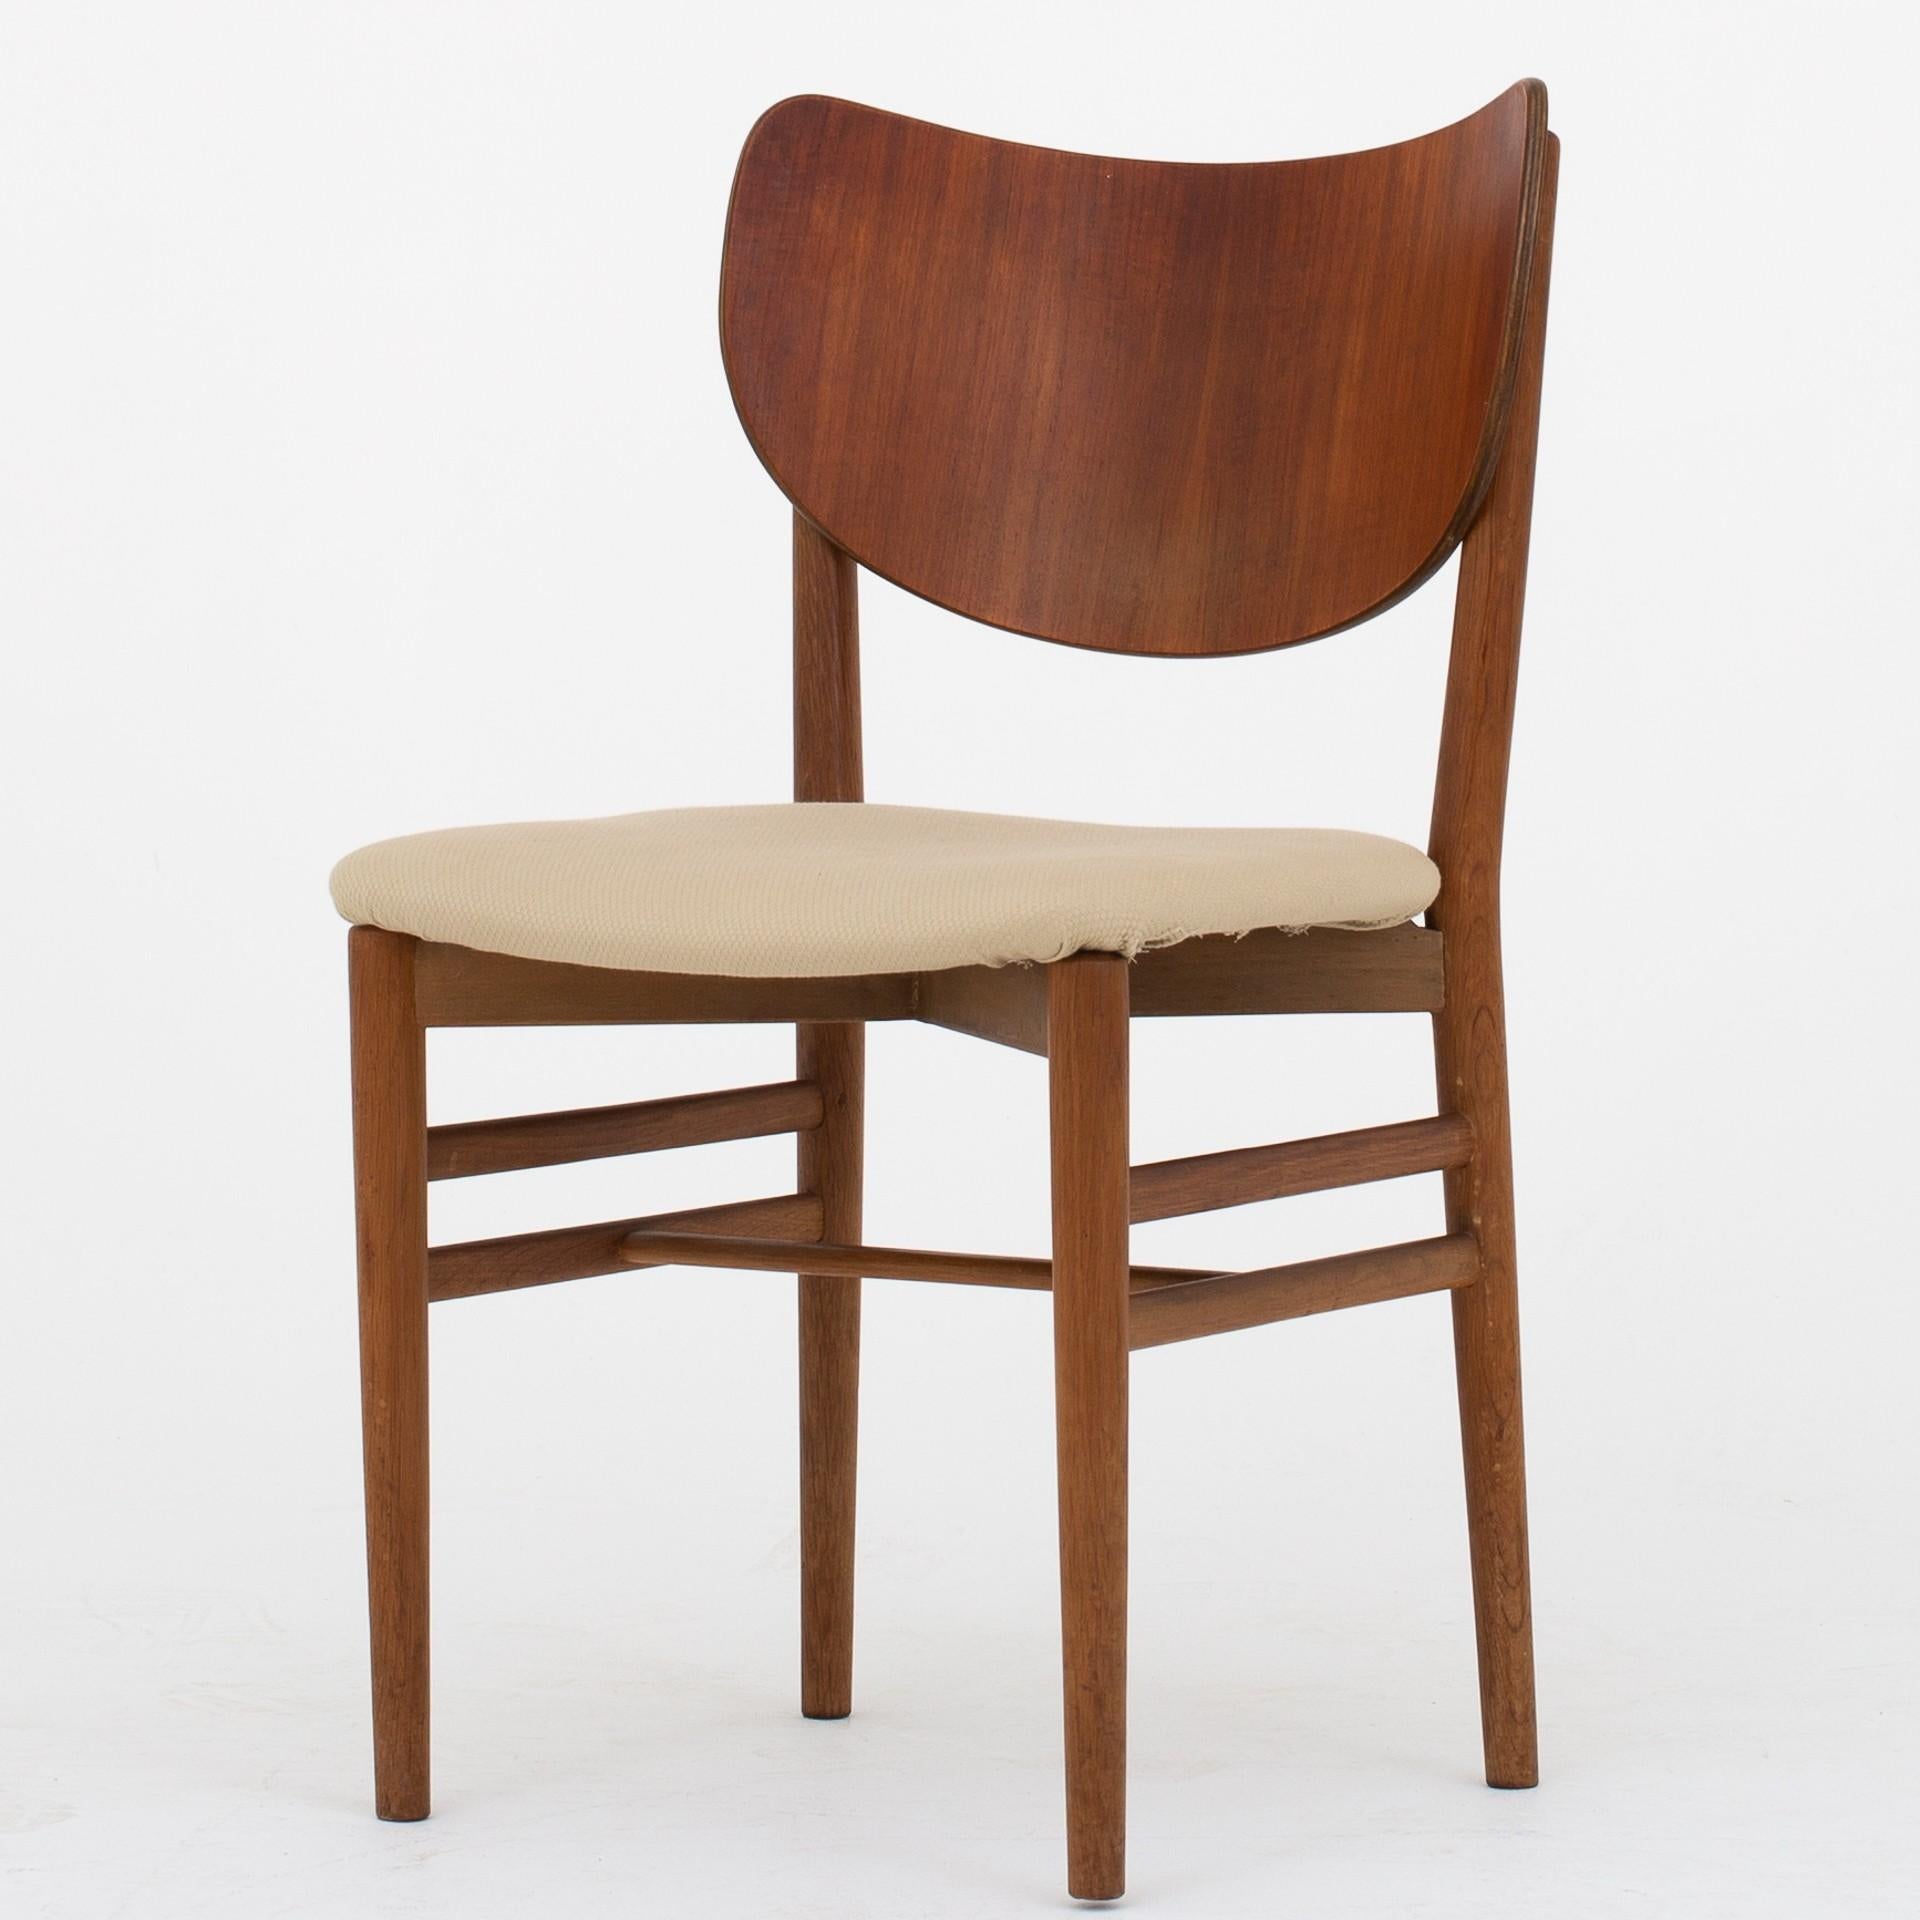 Set of six chairs with oak frame and top tail in teak, seat in original light wool. Maker Slagelse Møbelværk.